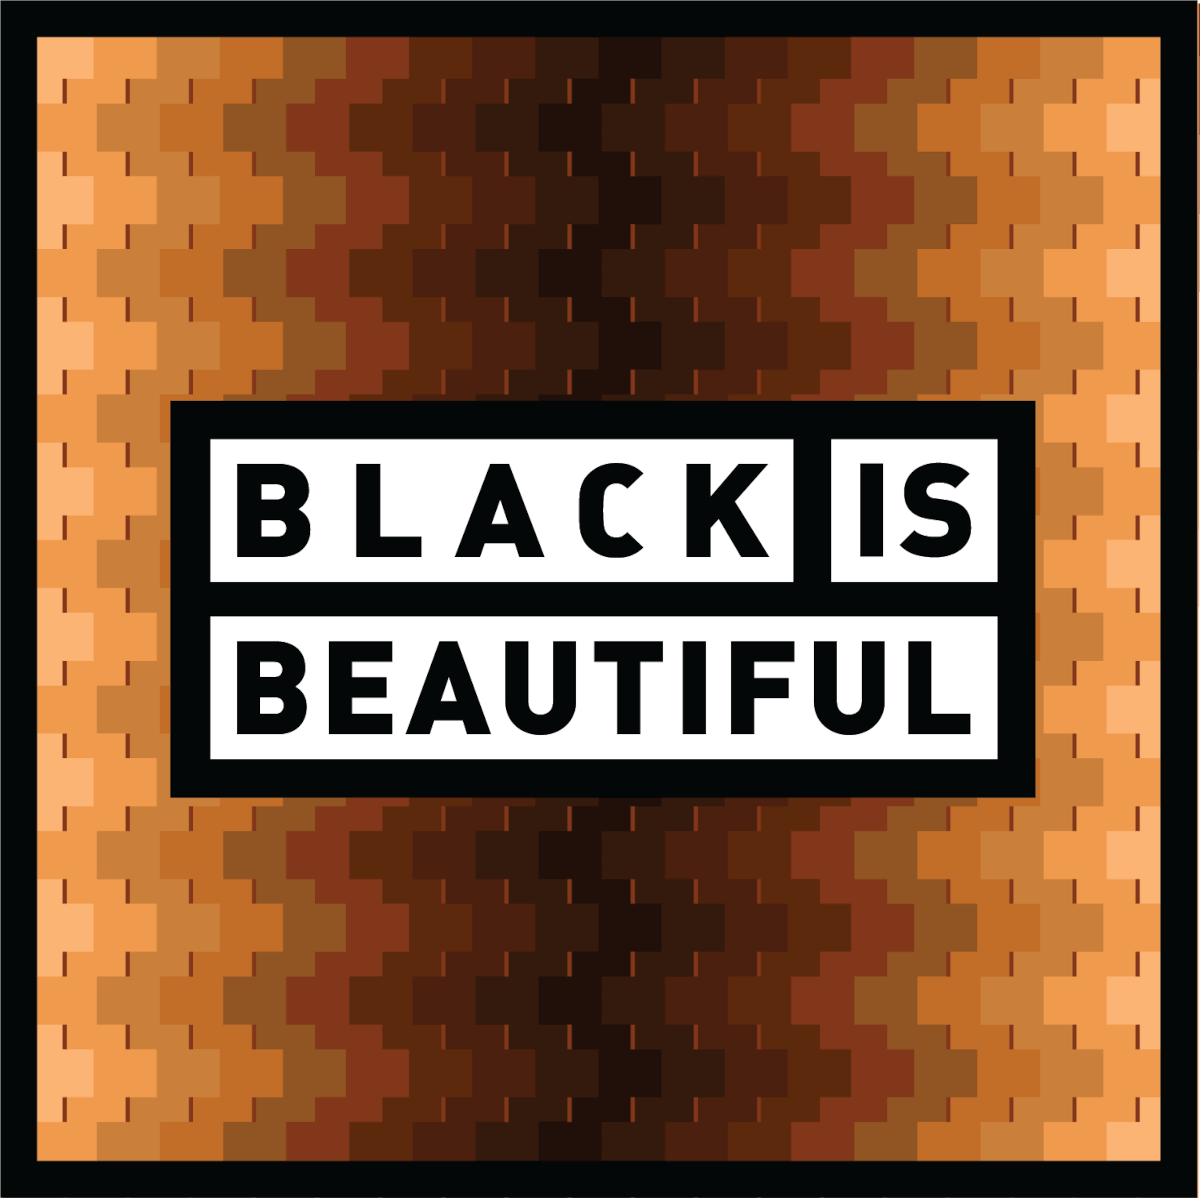 Latest print article: Black is Beautiful